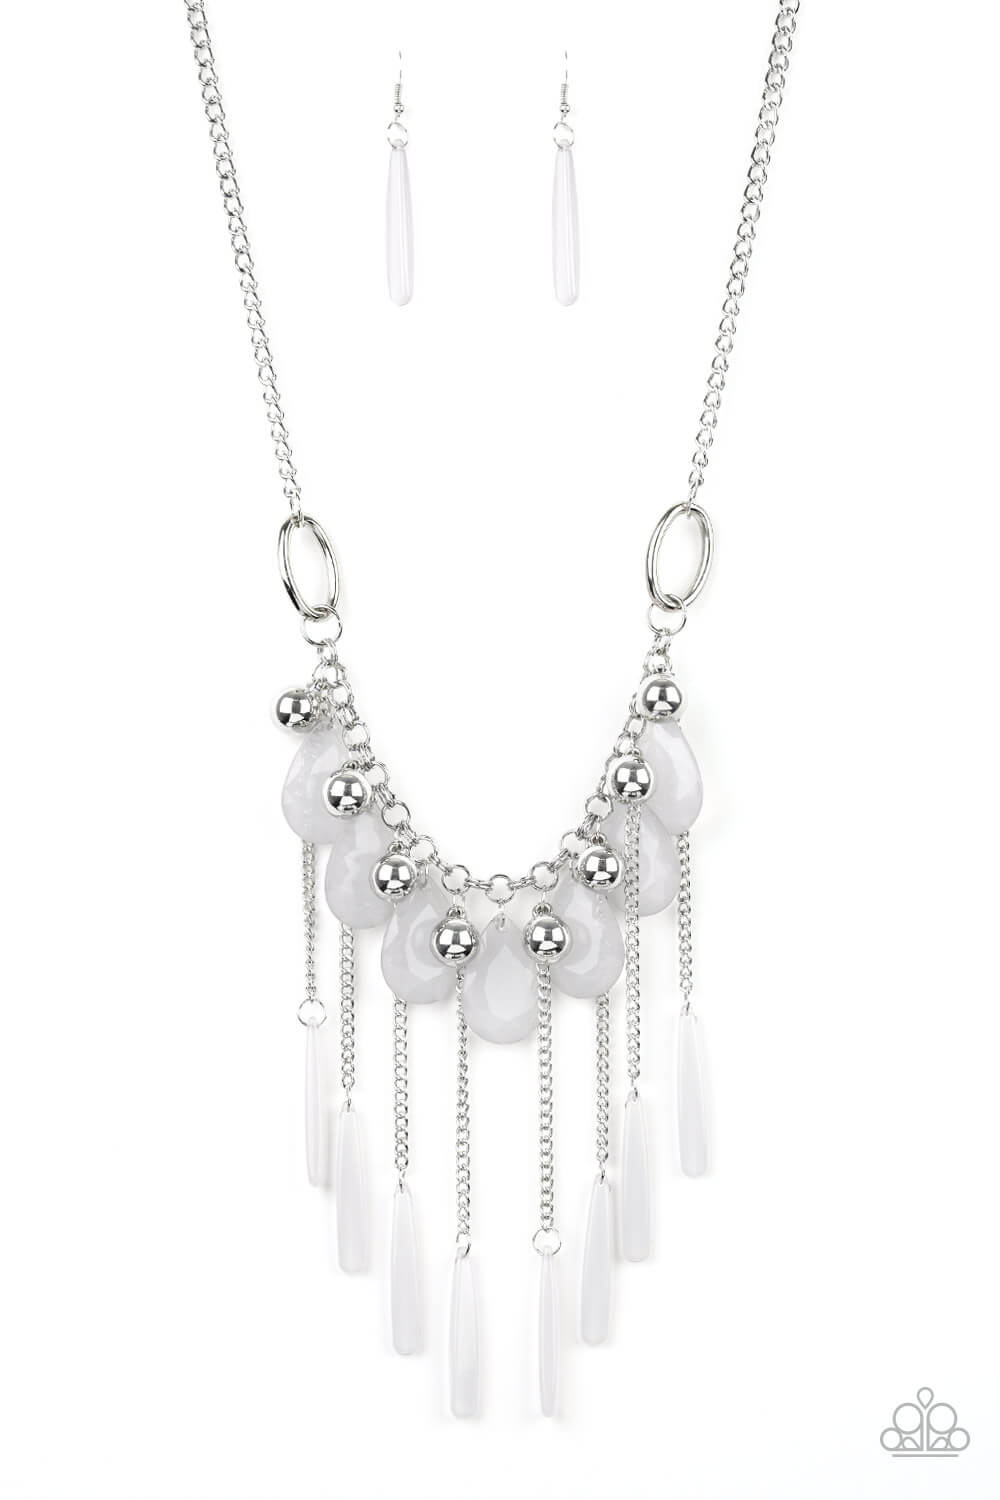 Roaring Riviera Necklace Set - Silver - Princess Glam Shop